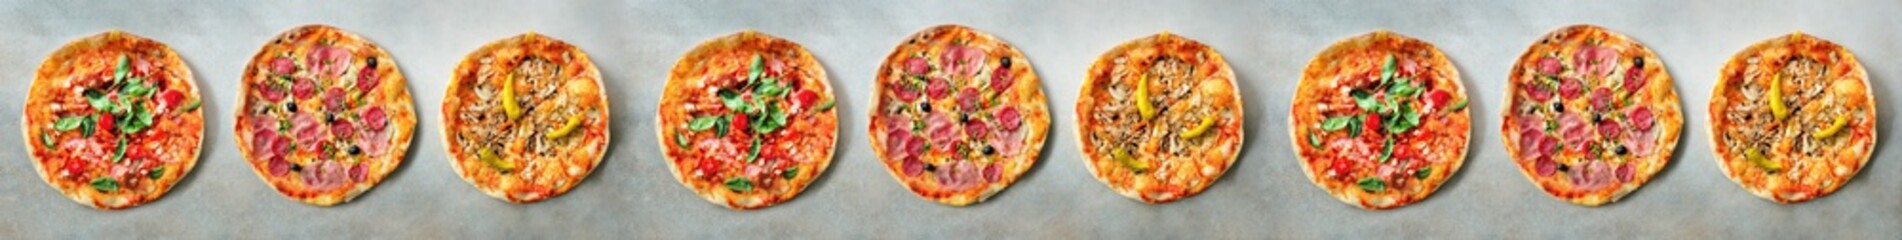 Pizza pattern. Nine pieces set on grey concrete background. Top view, copyspace